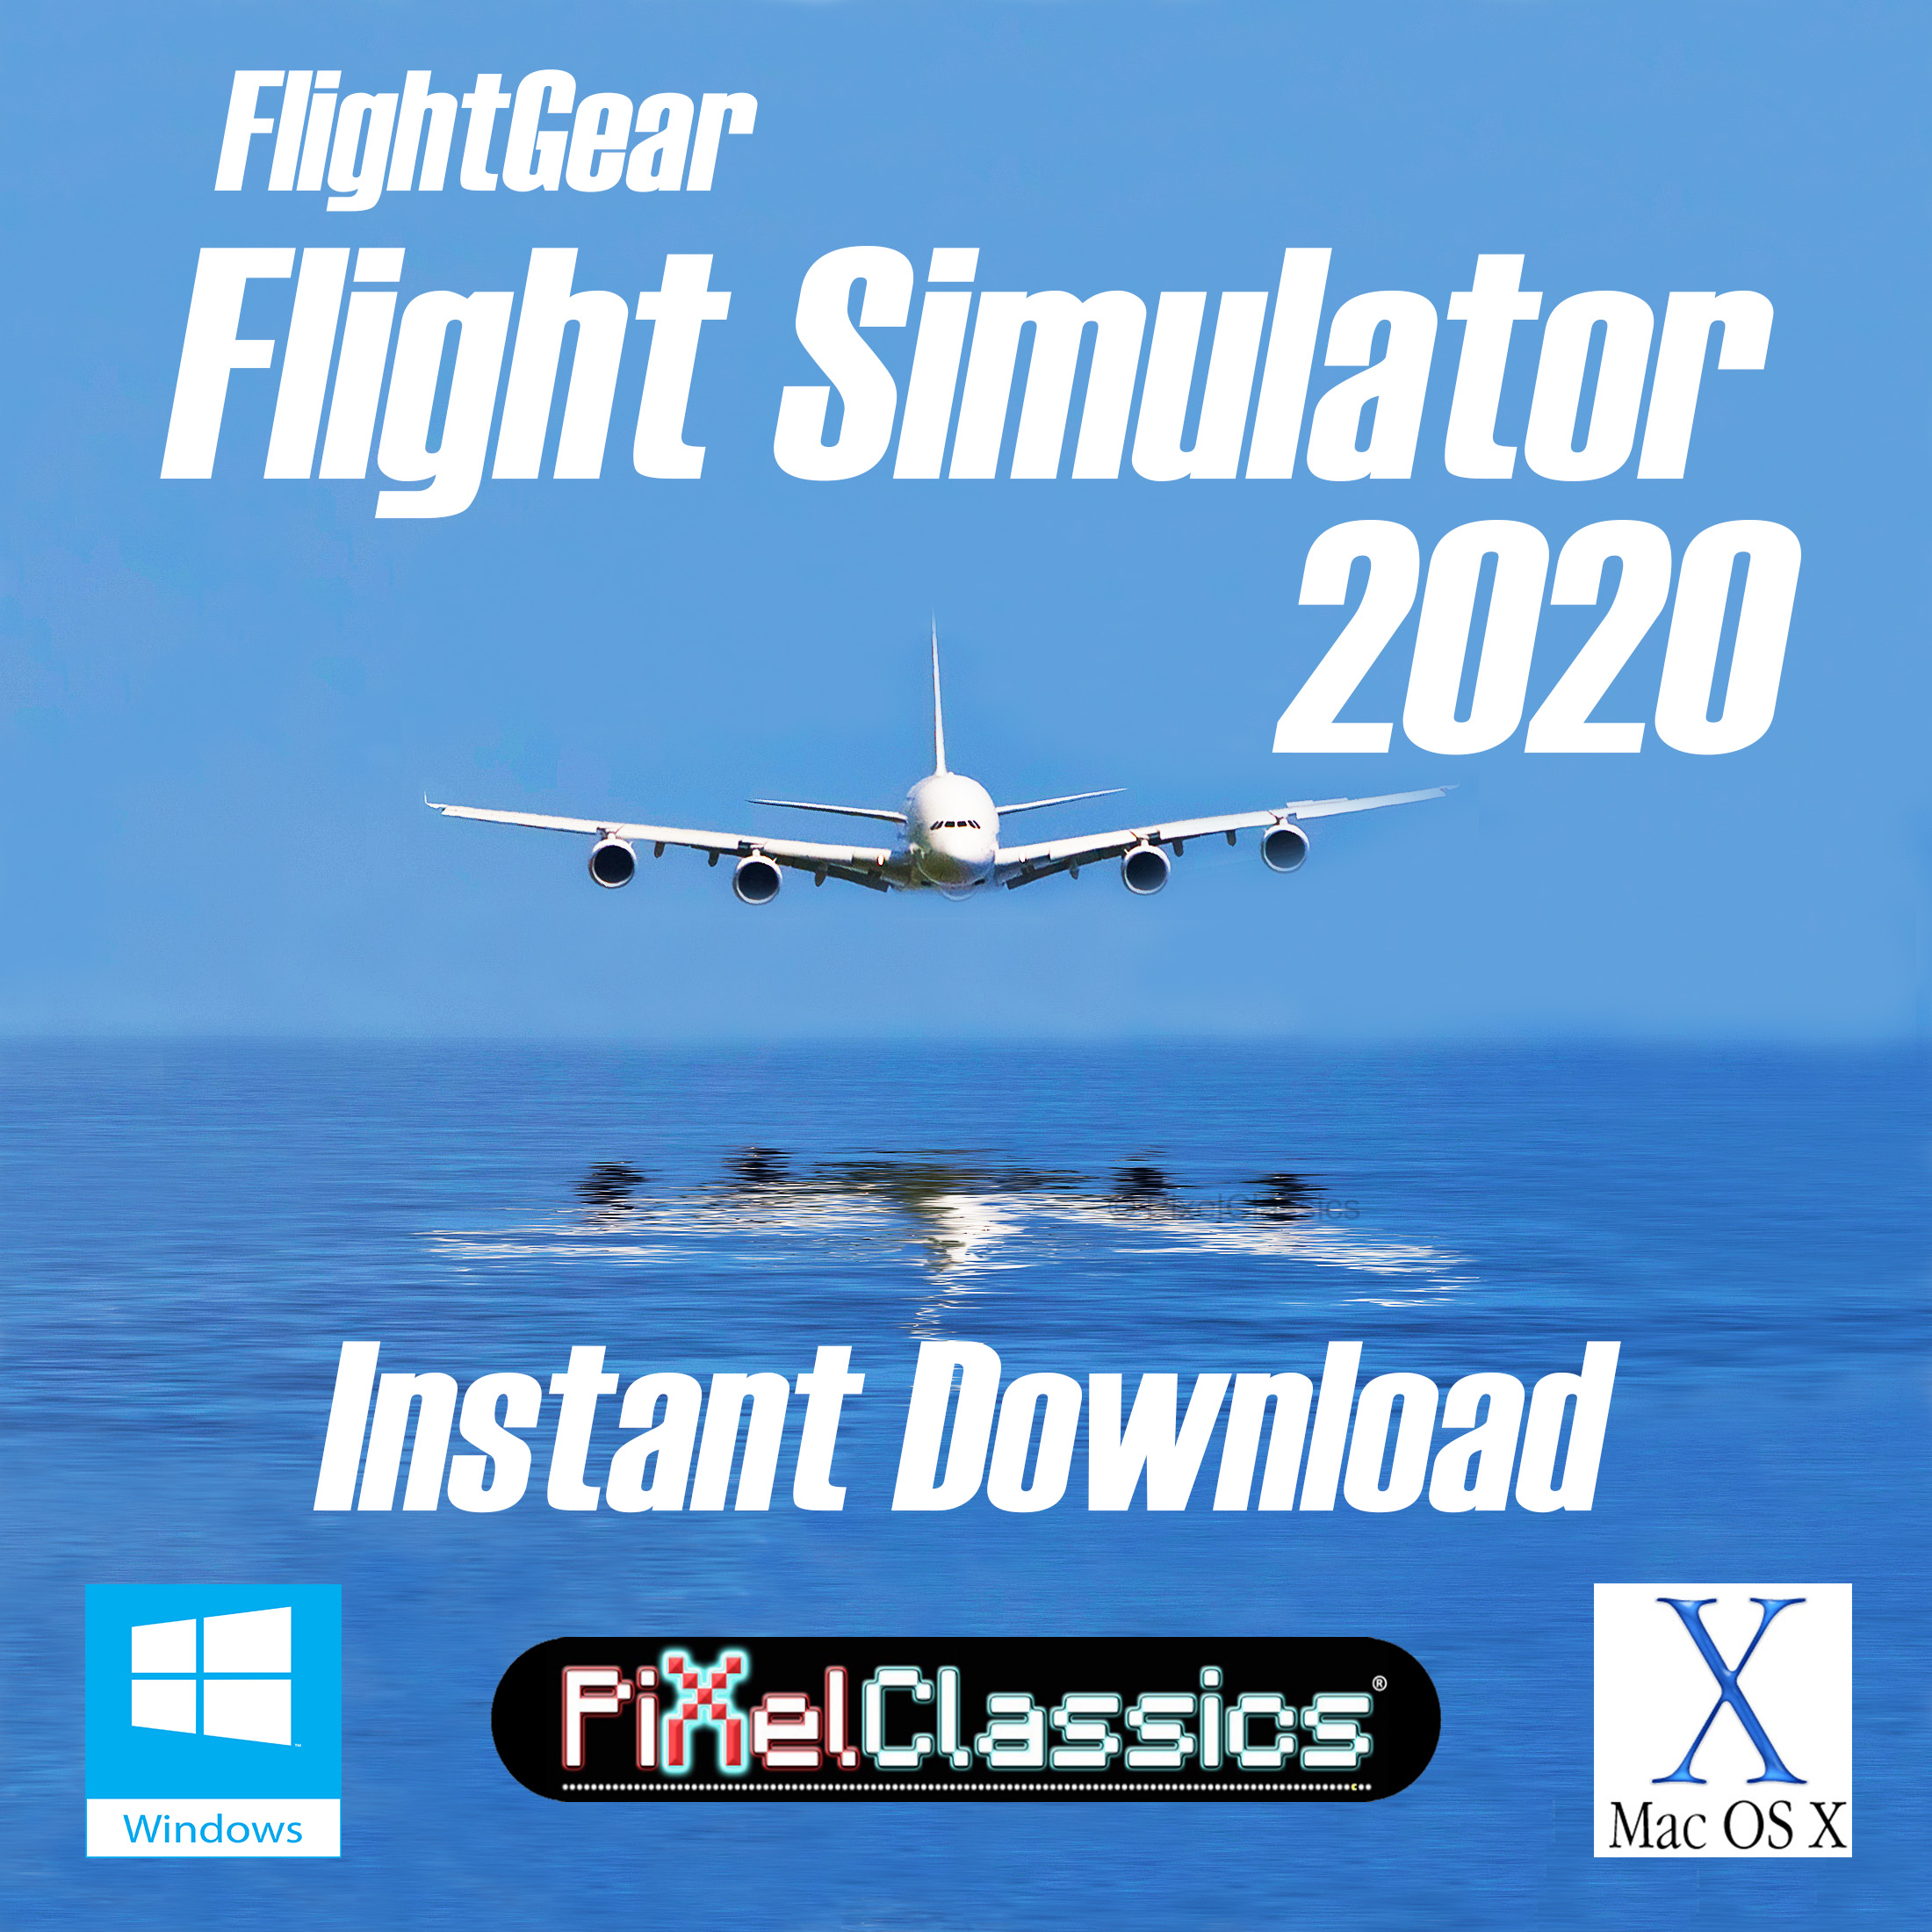 spaceflight simulator pc download free